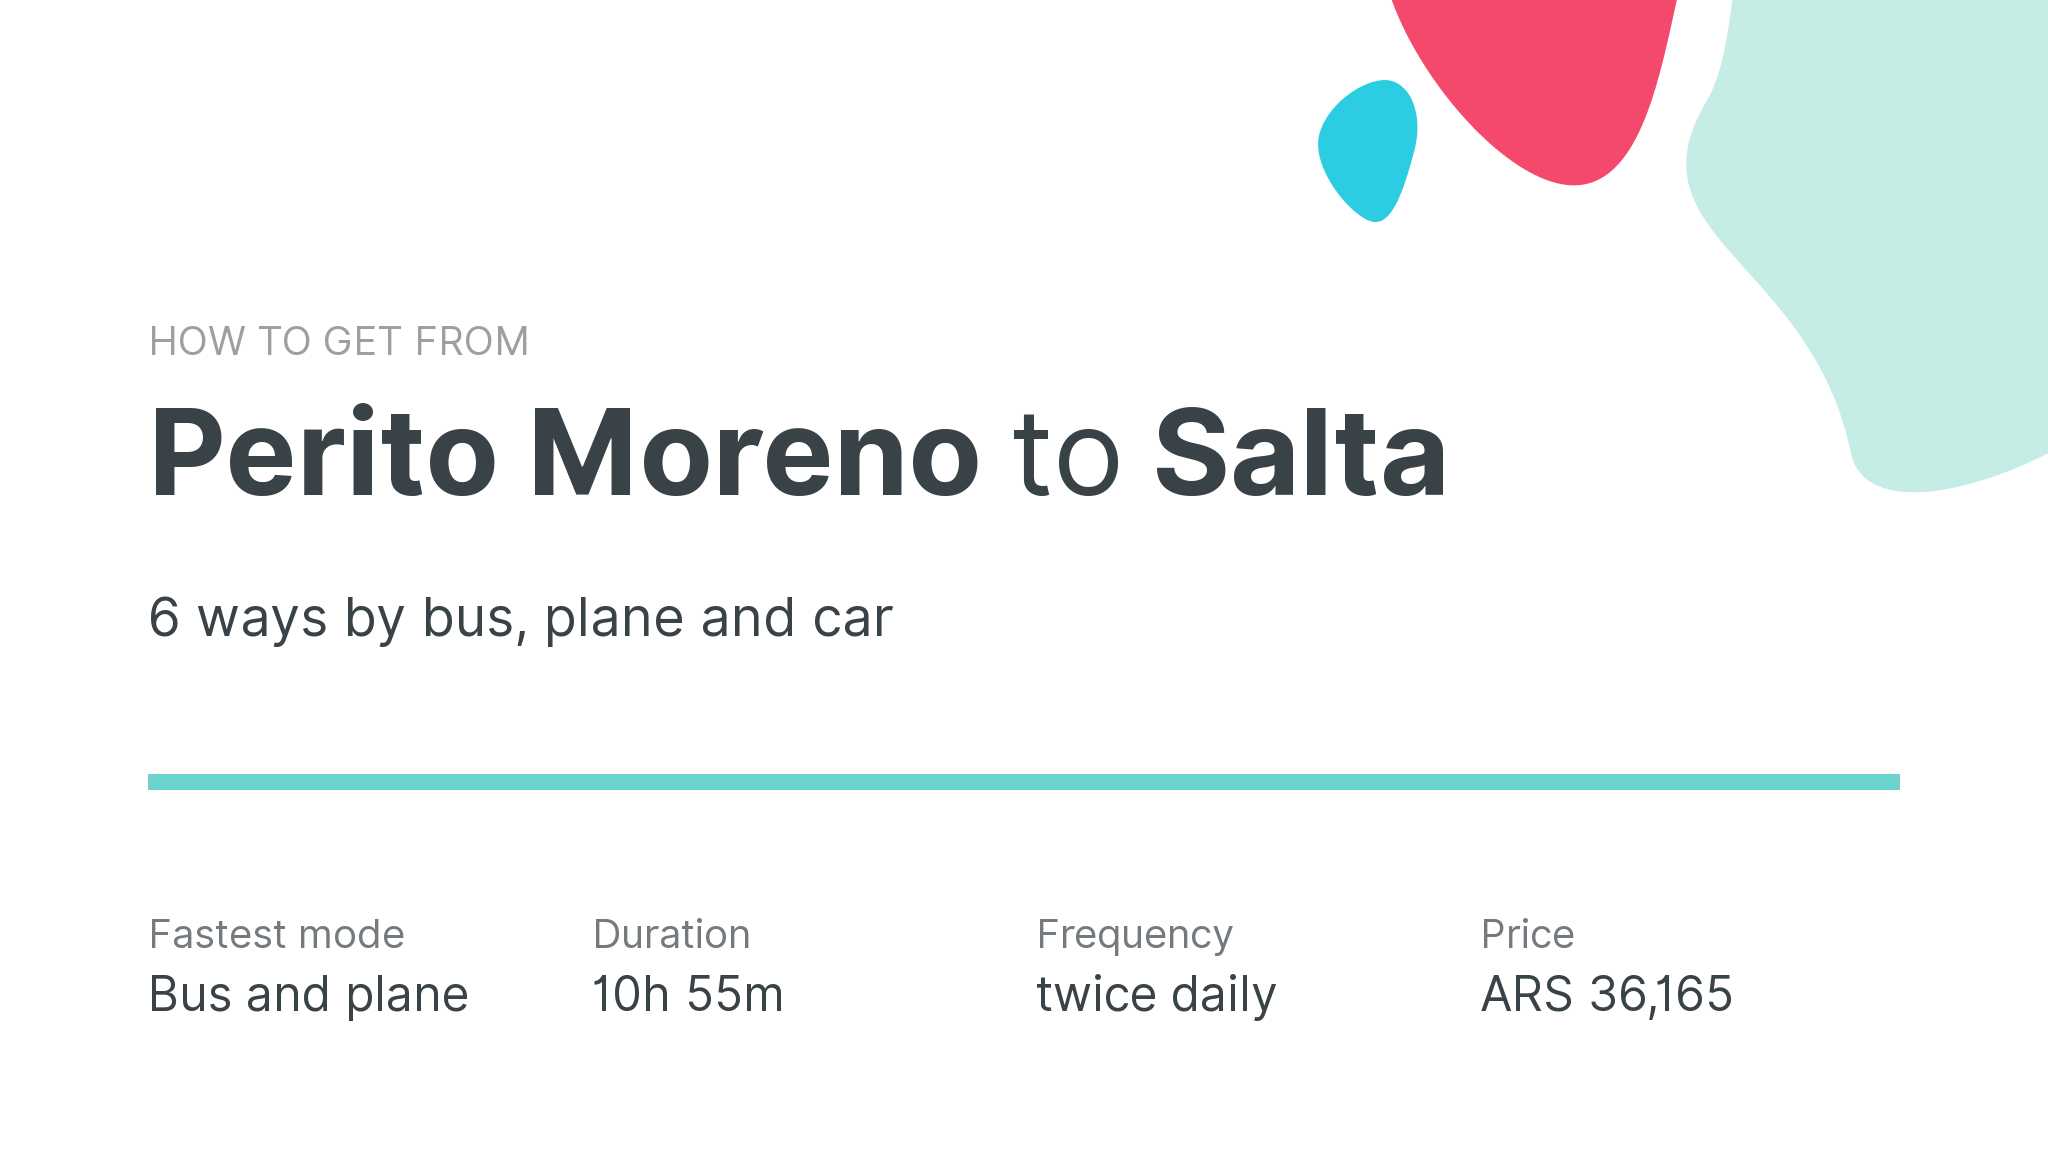 How do I get from Perito Moreno to Salta